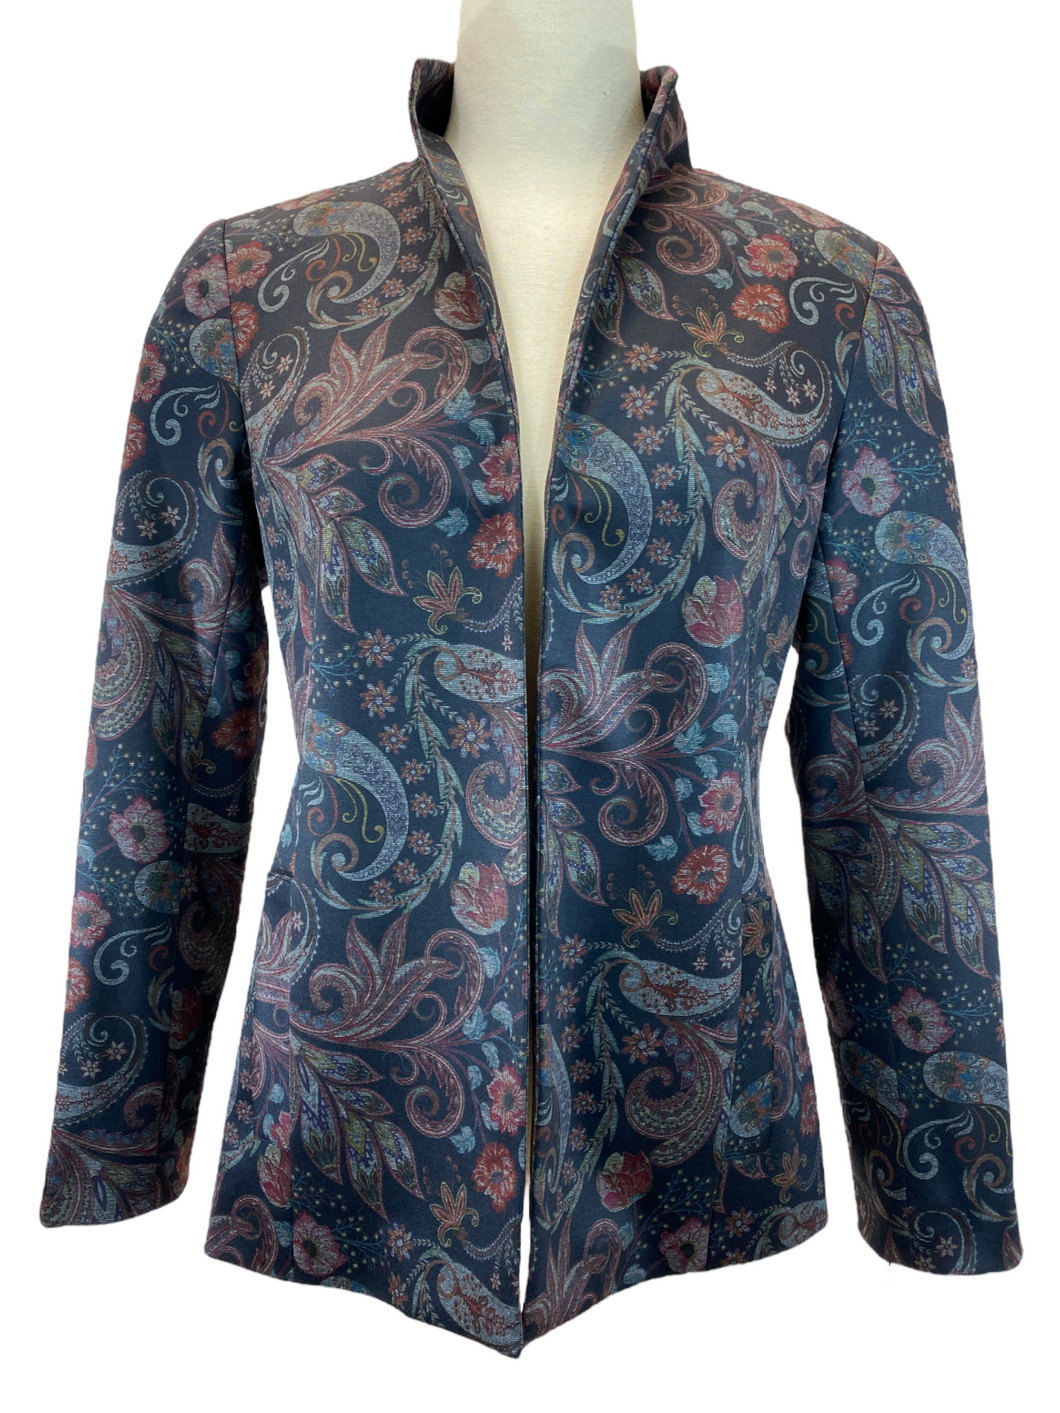 E&F Shaped Jacket - Dark Paisley Floral